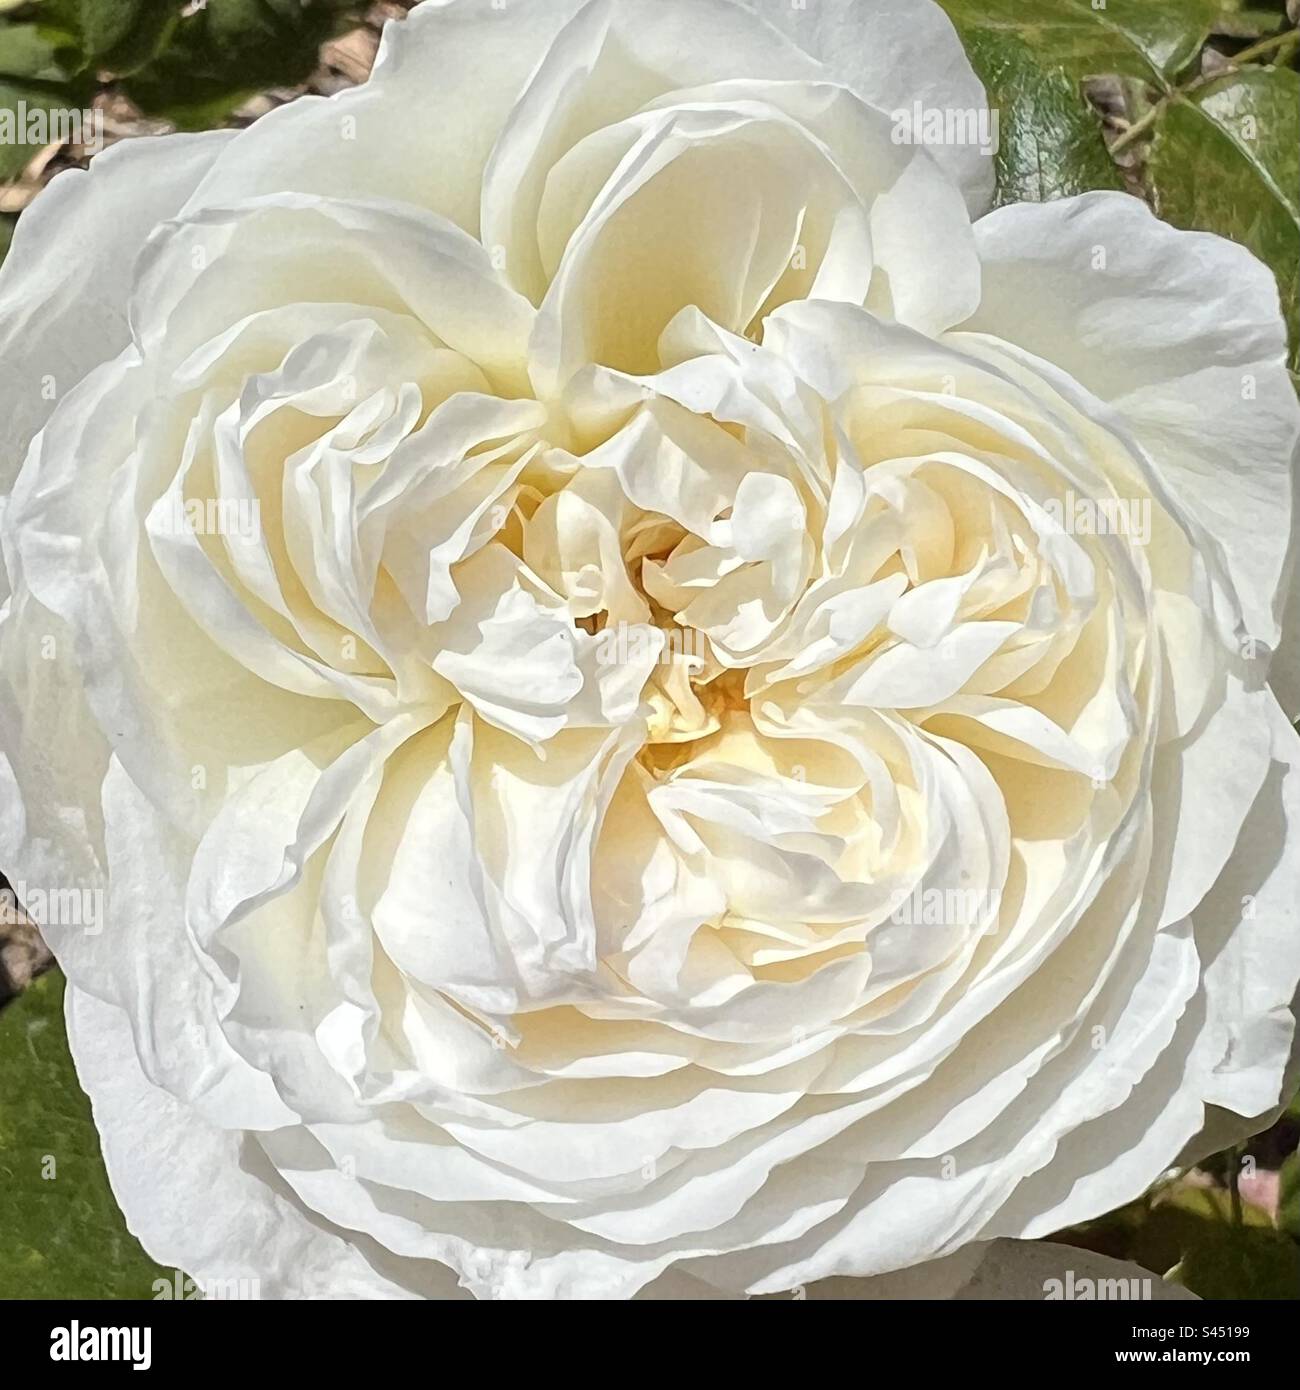 White cabbage rose Stock Photo - Alamy